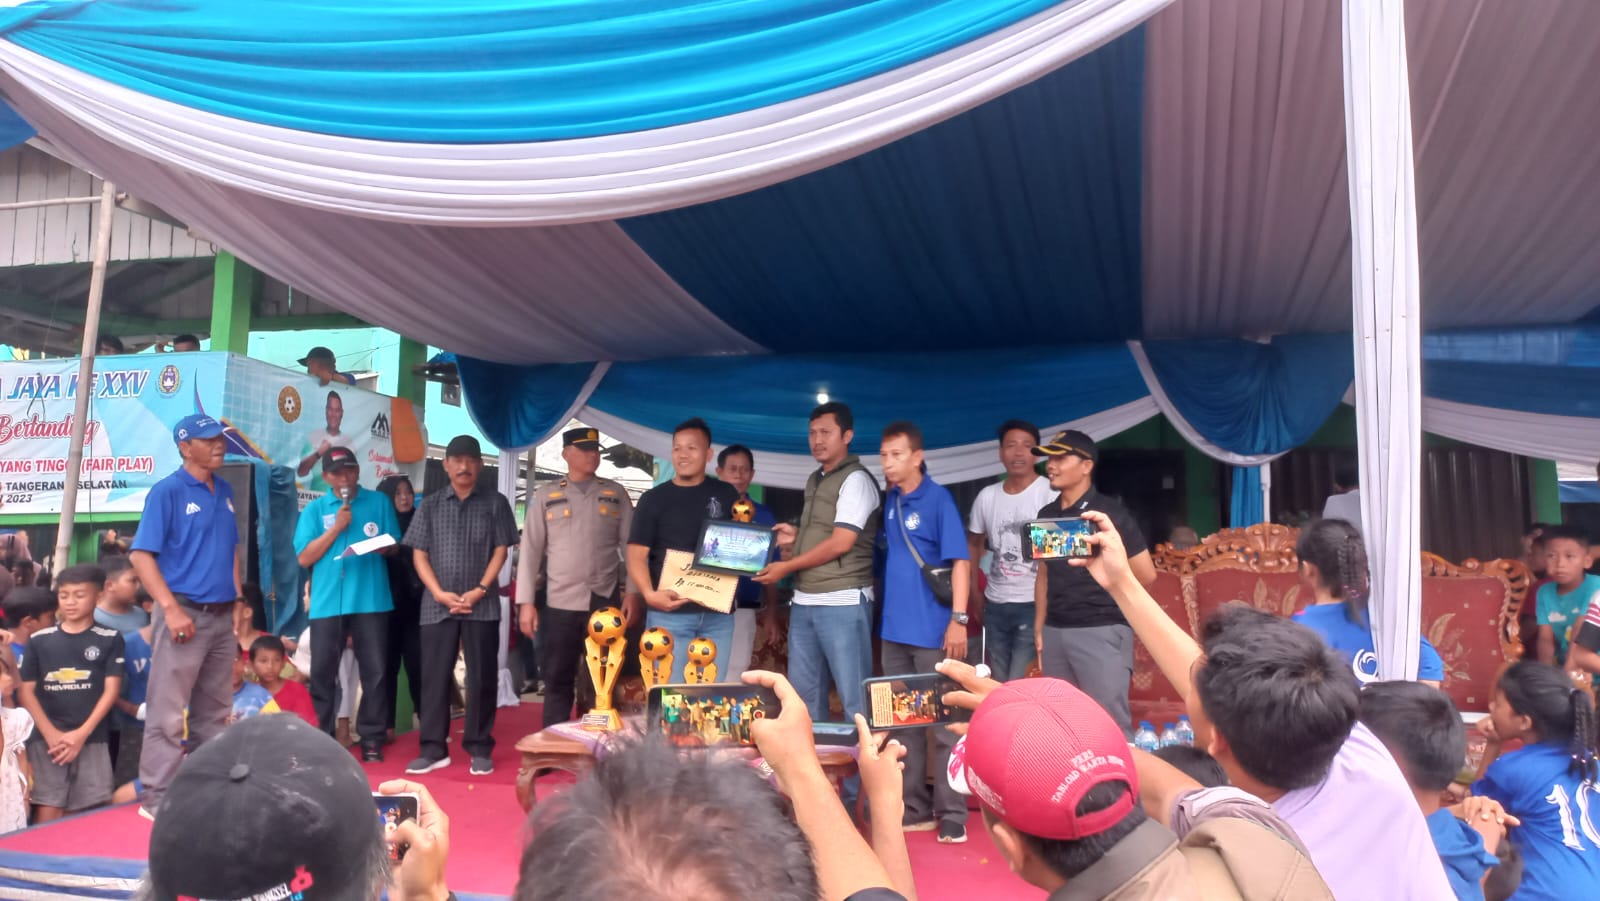 Denis juara pertama, Kecamatan Ciputat juara kedua, HBB Boy dan Ad-Sya FC juara bersama.(Foto: dok/Panitia Bina Jaya Cup).